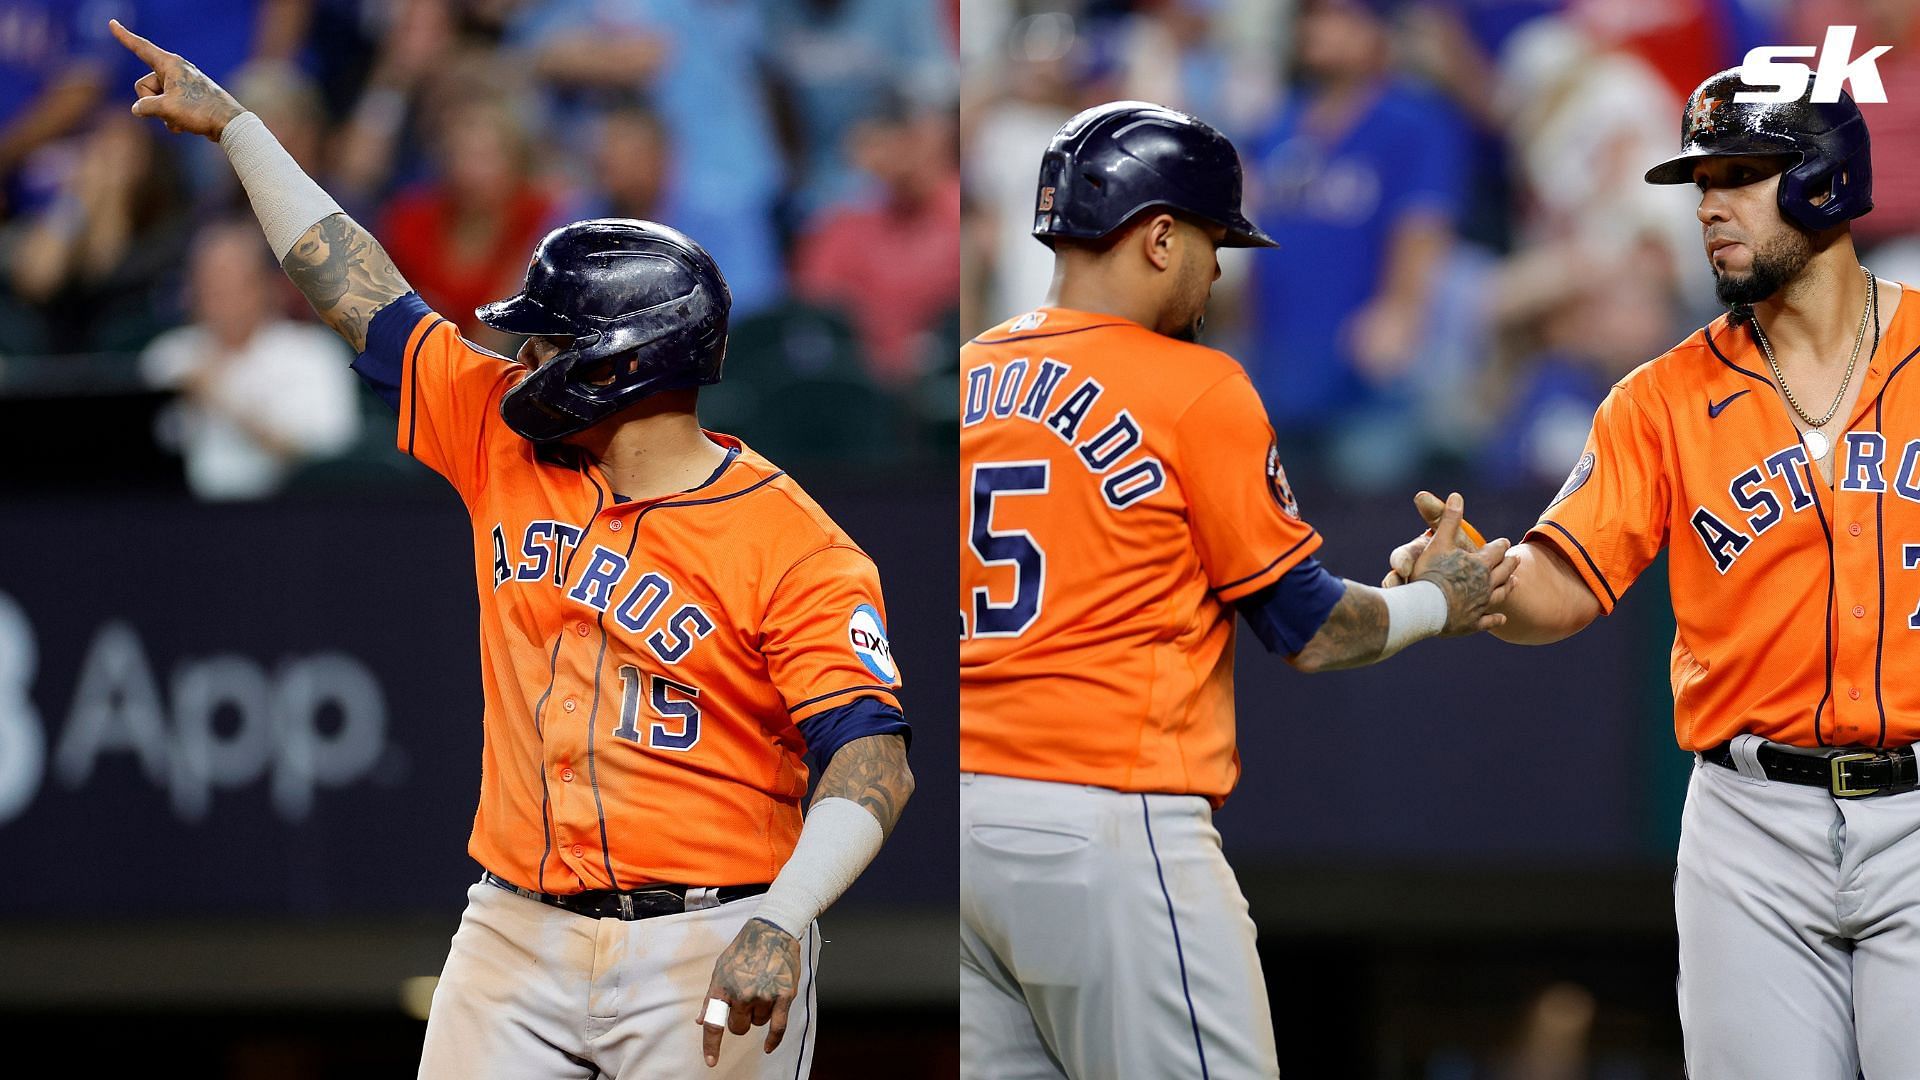 Astros return to orange with new uniforms